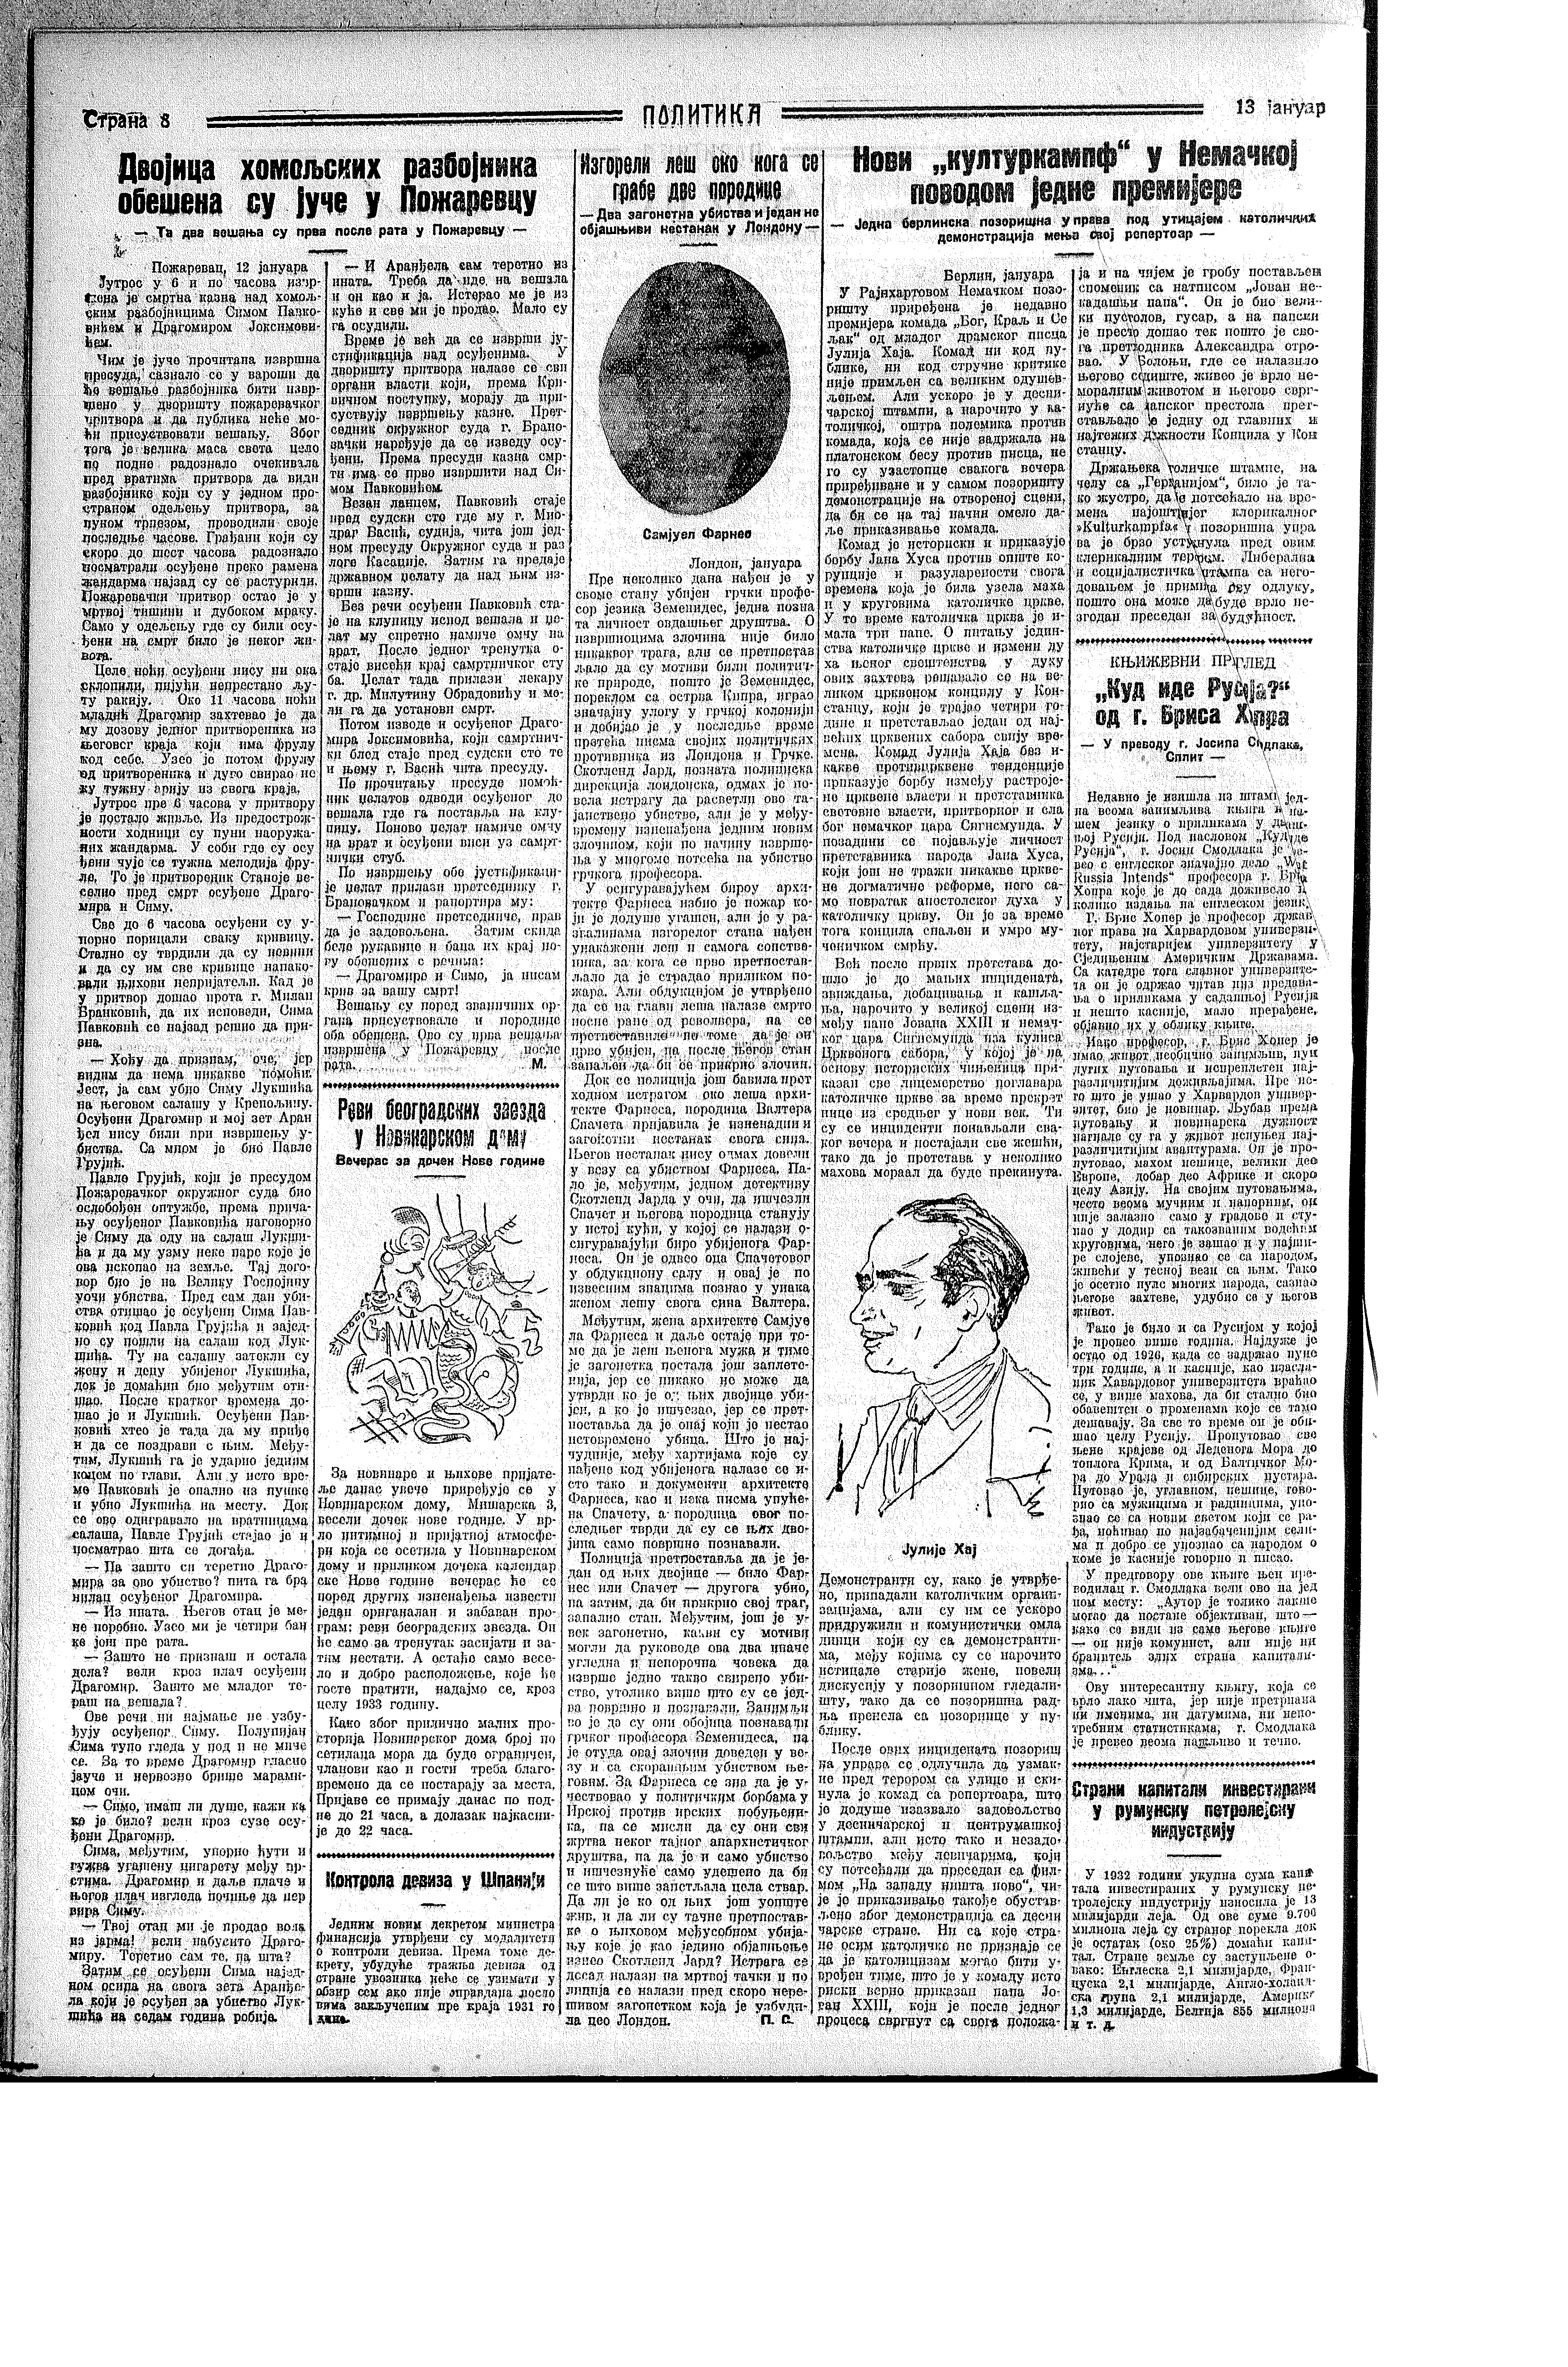 Dvojica homoljskih razbojnika obešena, Politika, 13.01.1933.